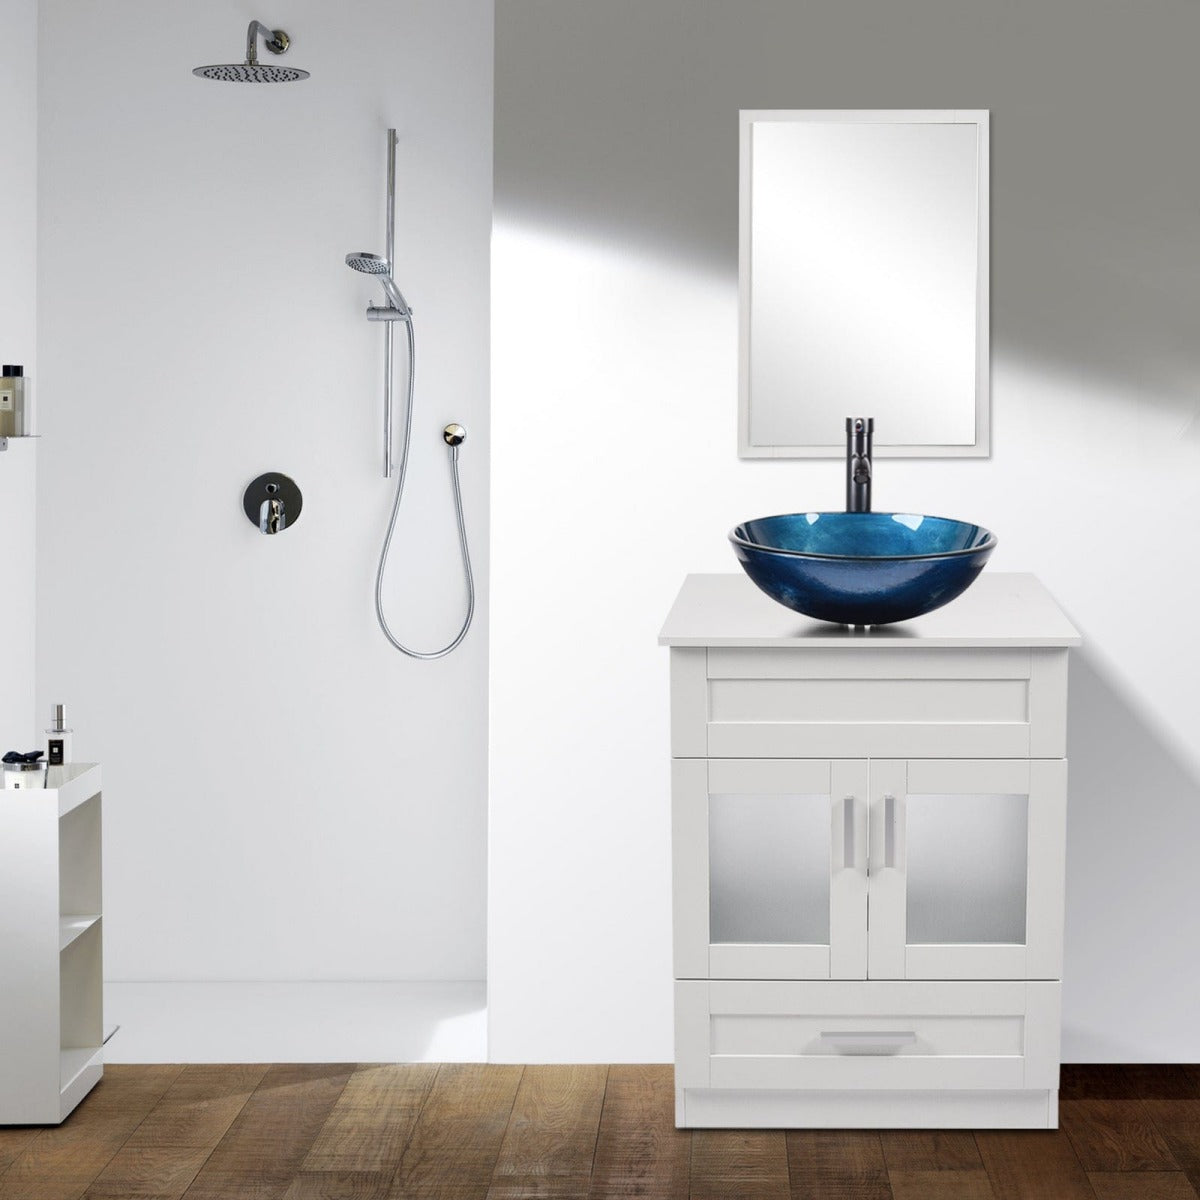 Elecwish White Bathroom Vanity with Blue Round Sink Set BA1001-WH displays in the bathroom